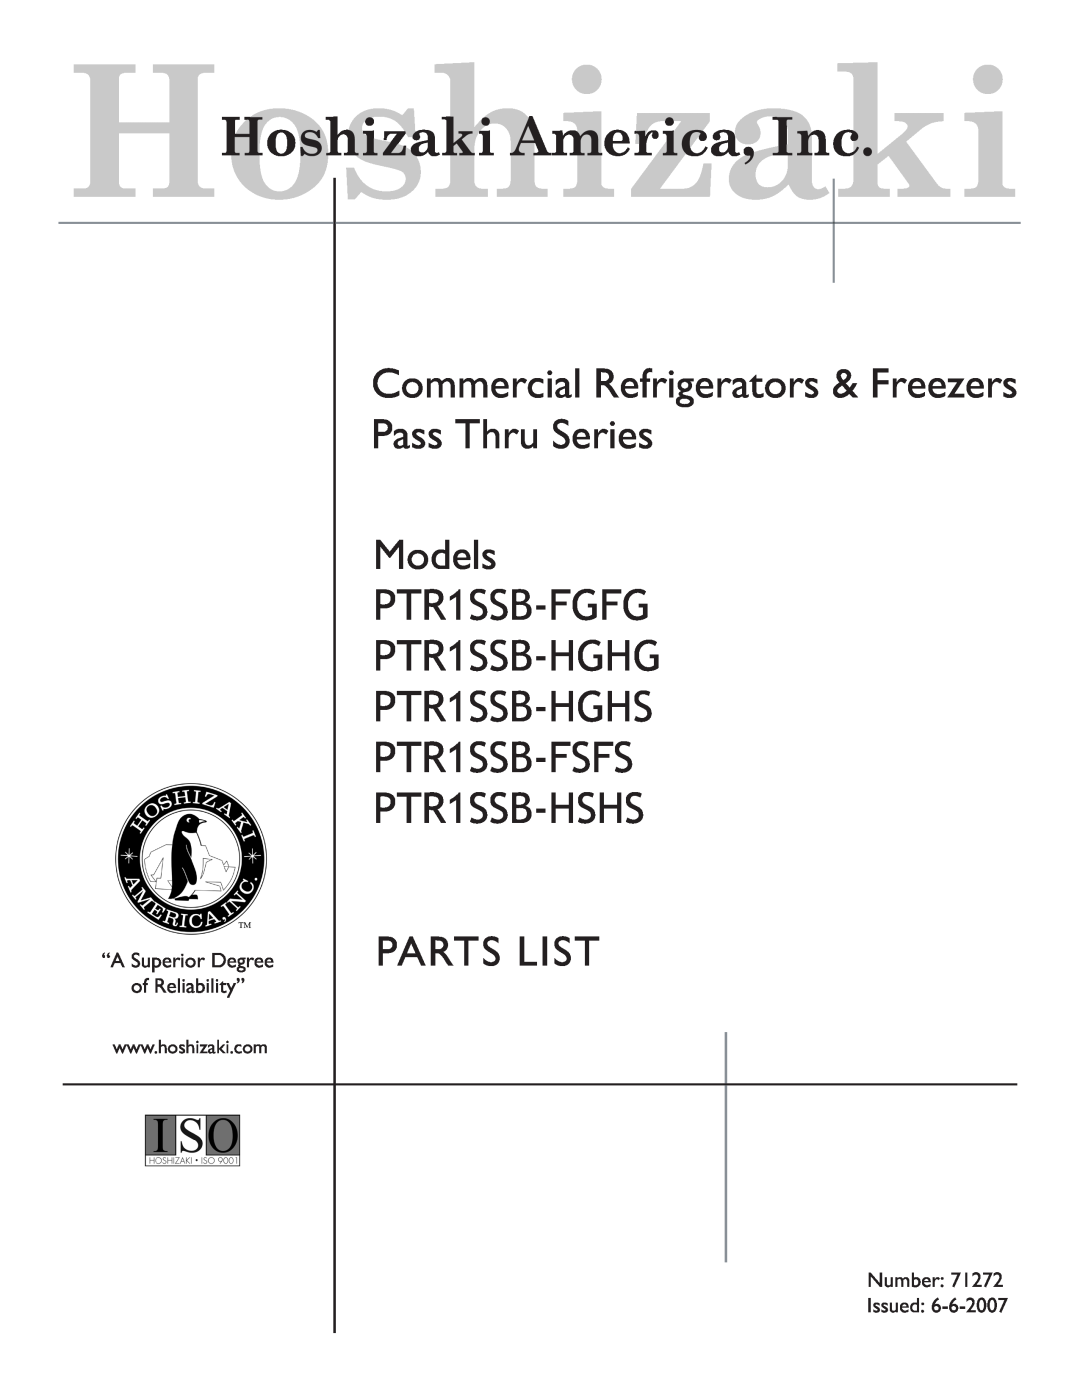 Hoshizaki manual Models, PTR1SSB-FGFG PTR1SSB-HGHG PTR1SSB-HGHS, PTR1SSB-FSFS PTR1SSB-HSHS, Parts List, Number Issued 